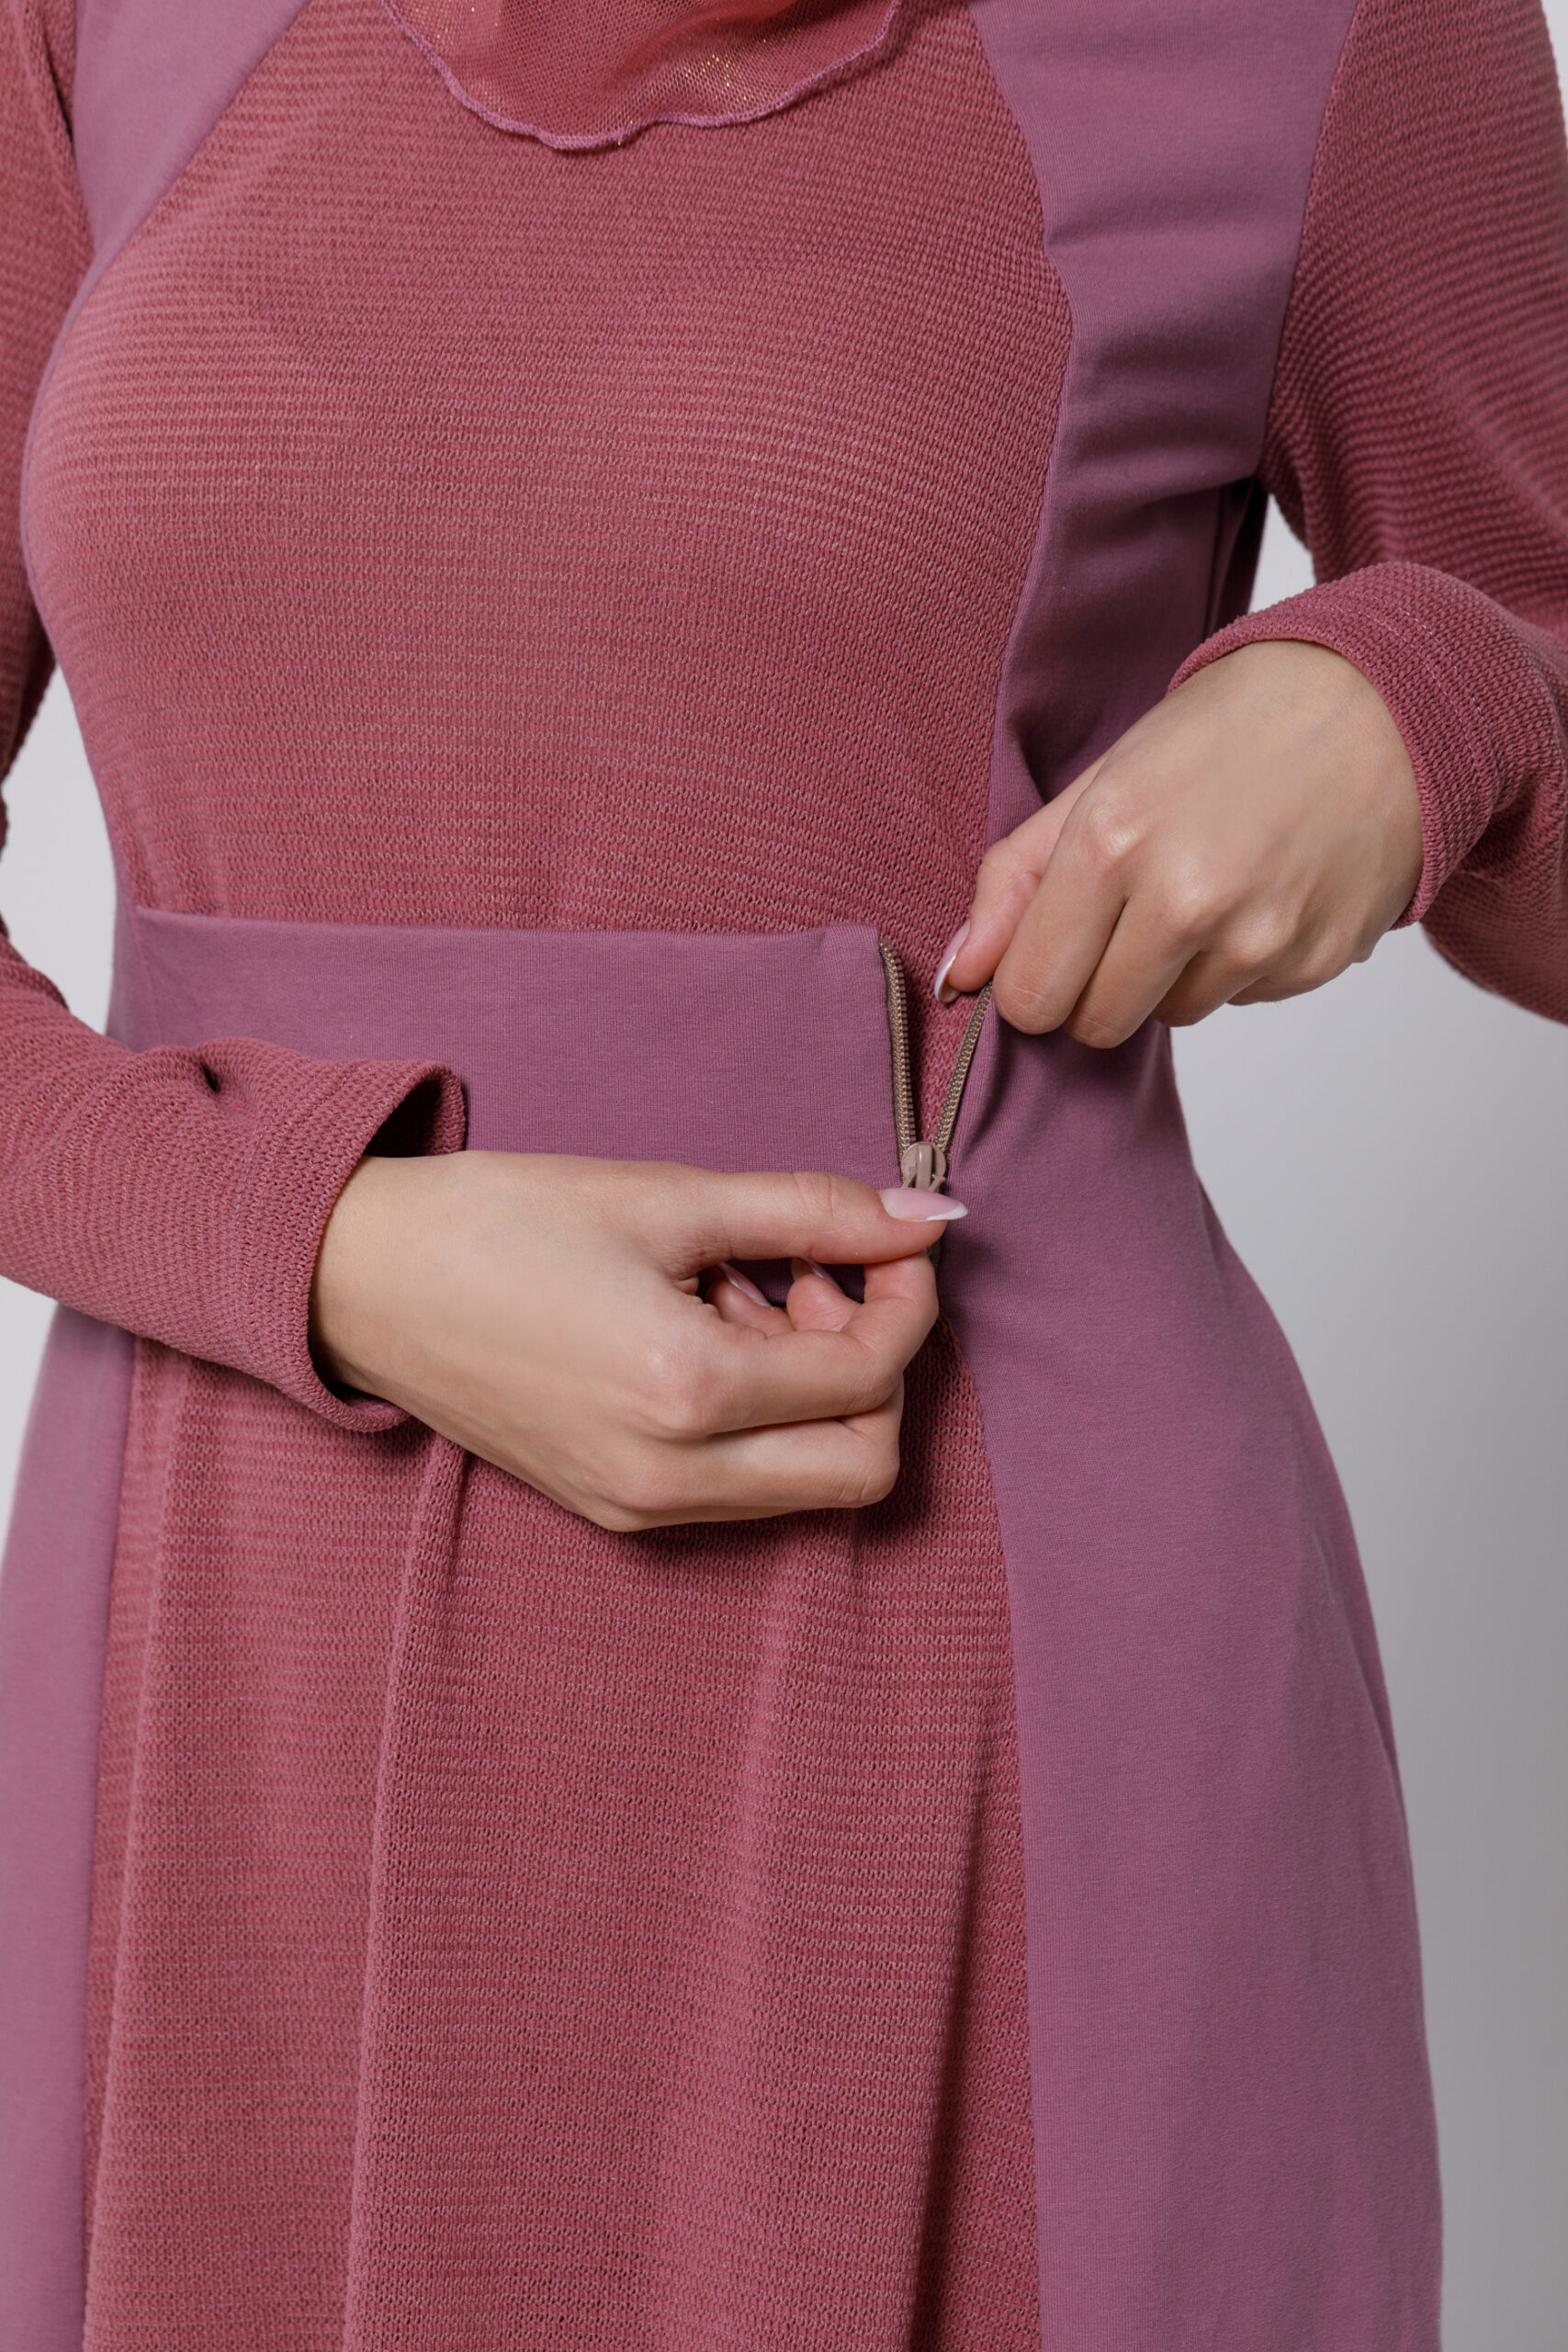 RAELYN midi dress in raspberry knit and plush. Natural fabrics, original design, handmade embroidery